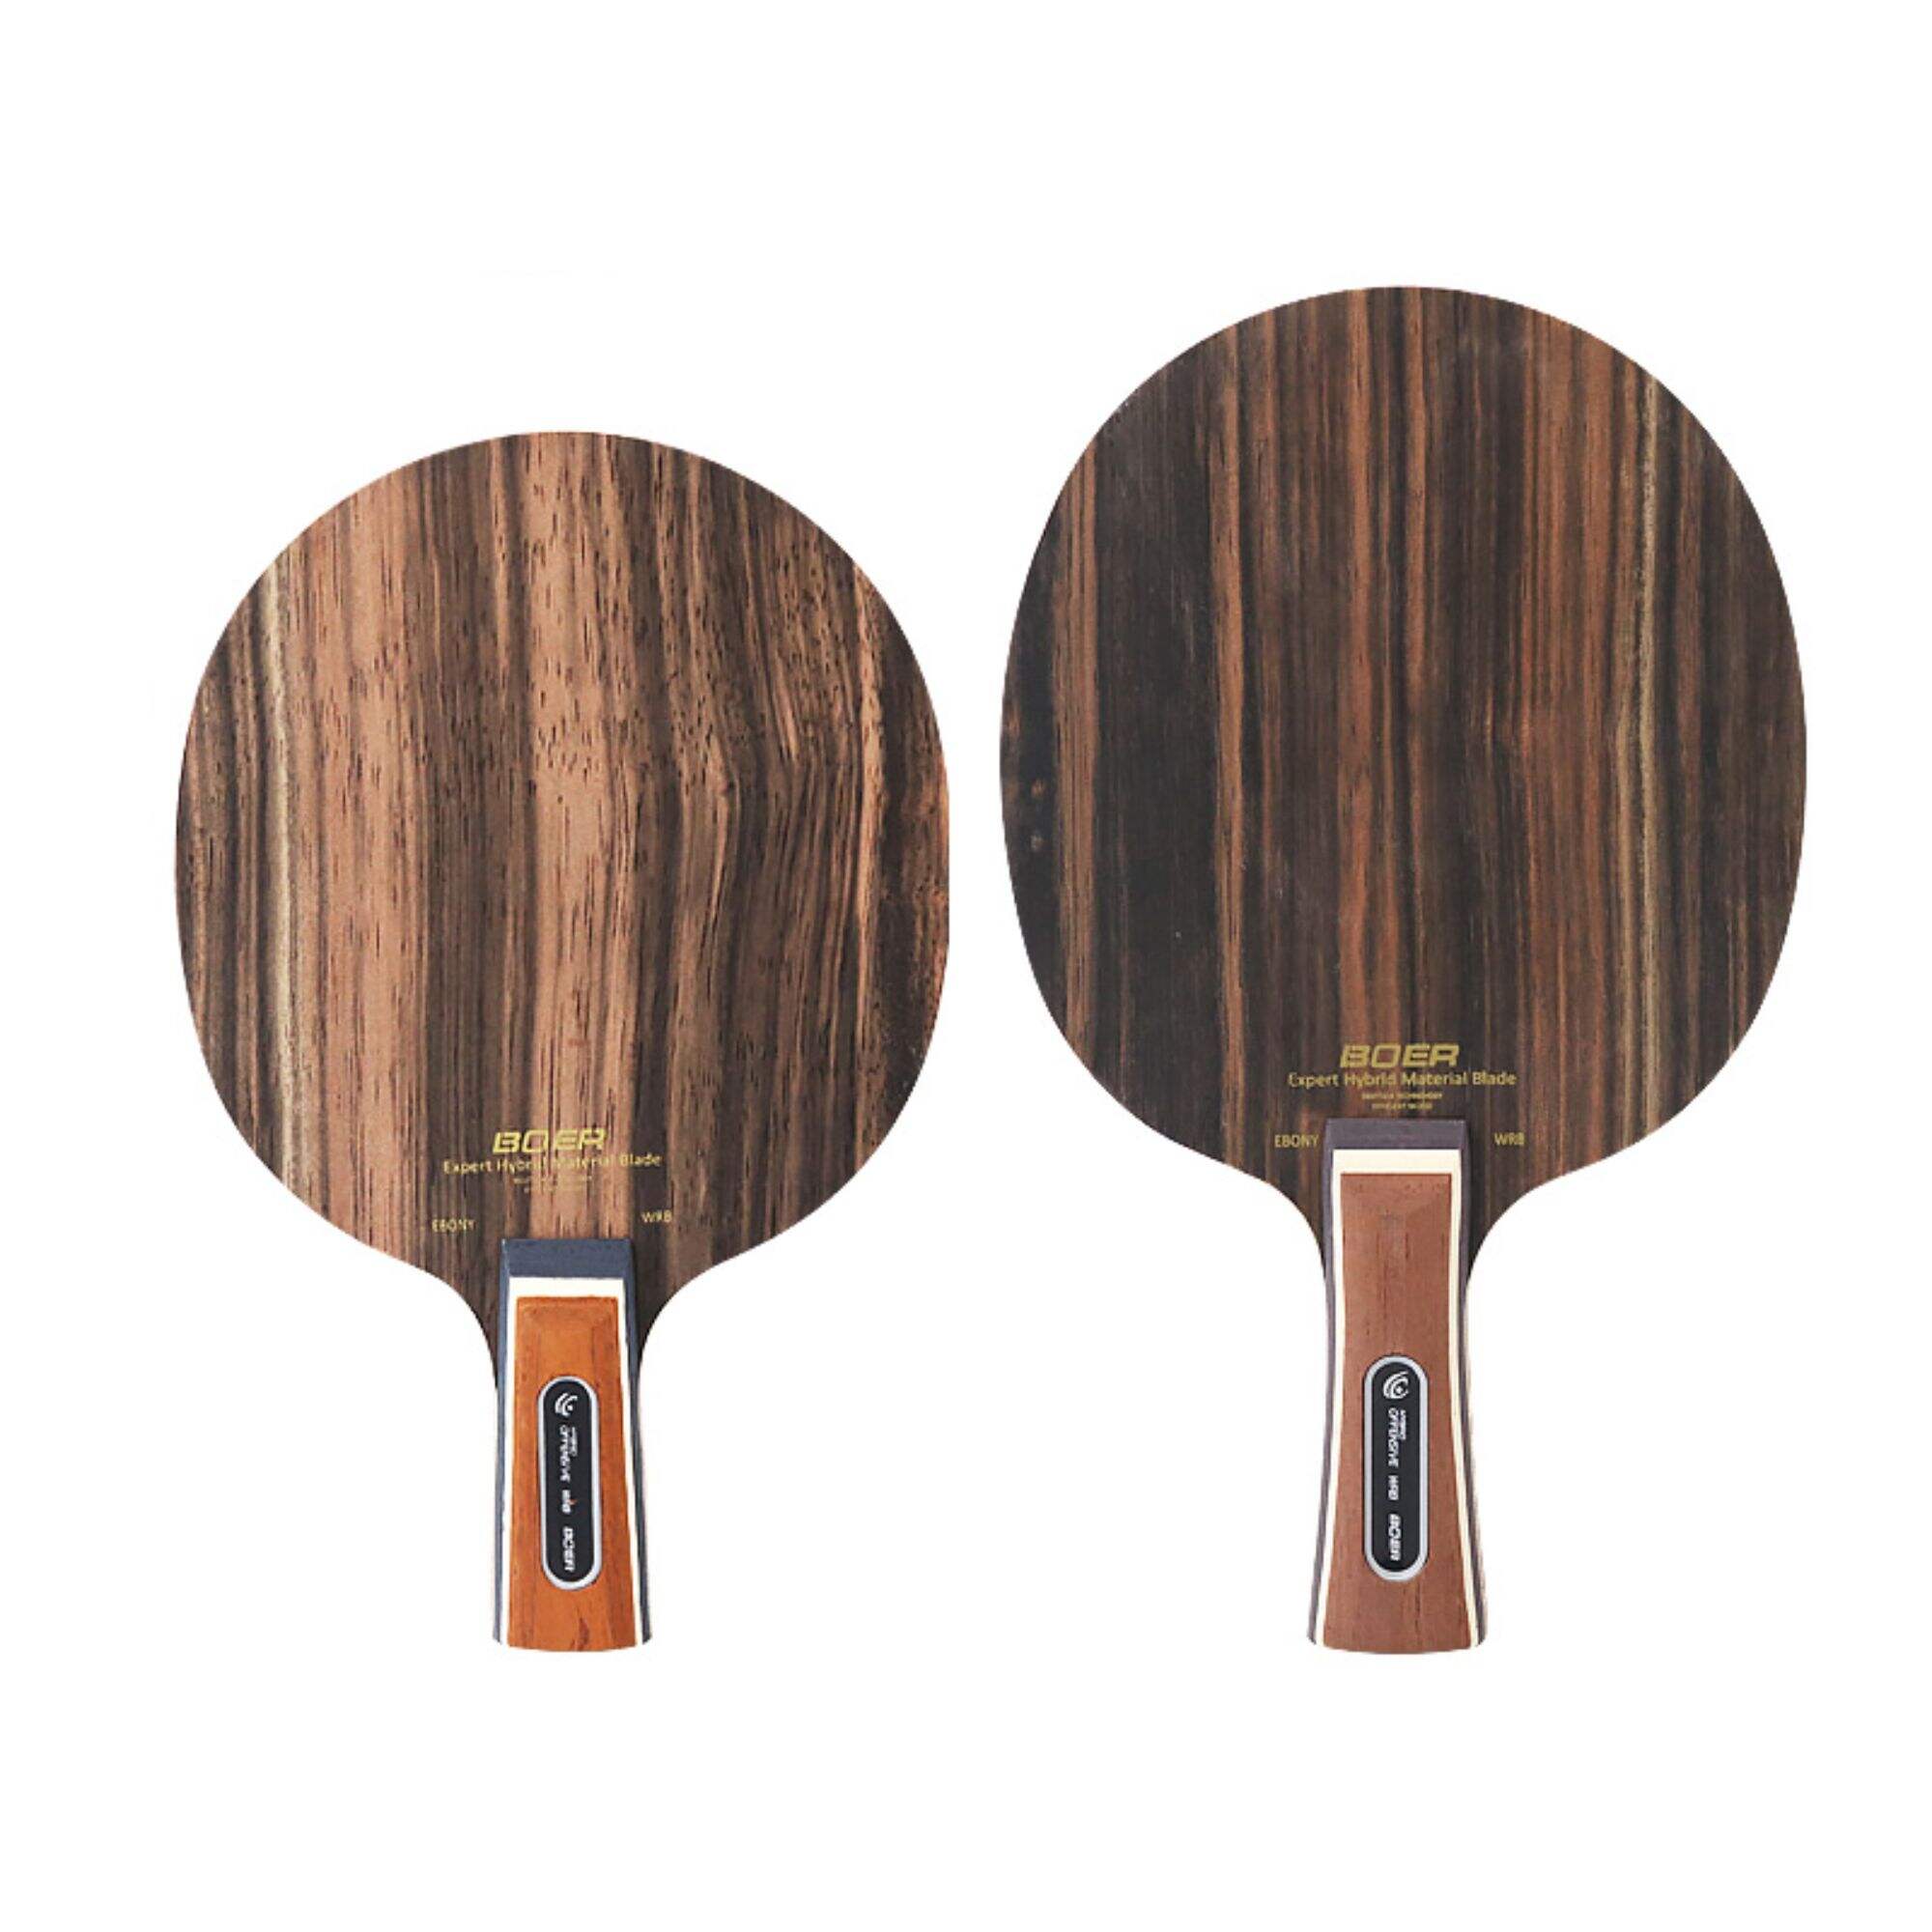 Boer Ebony Wood Table Tennis Blade